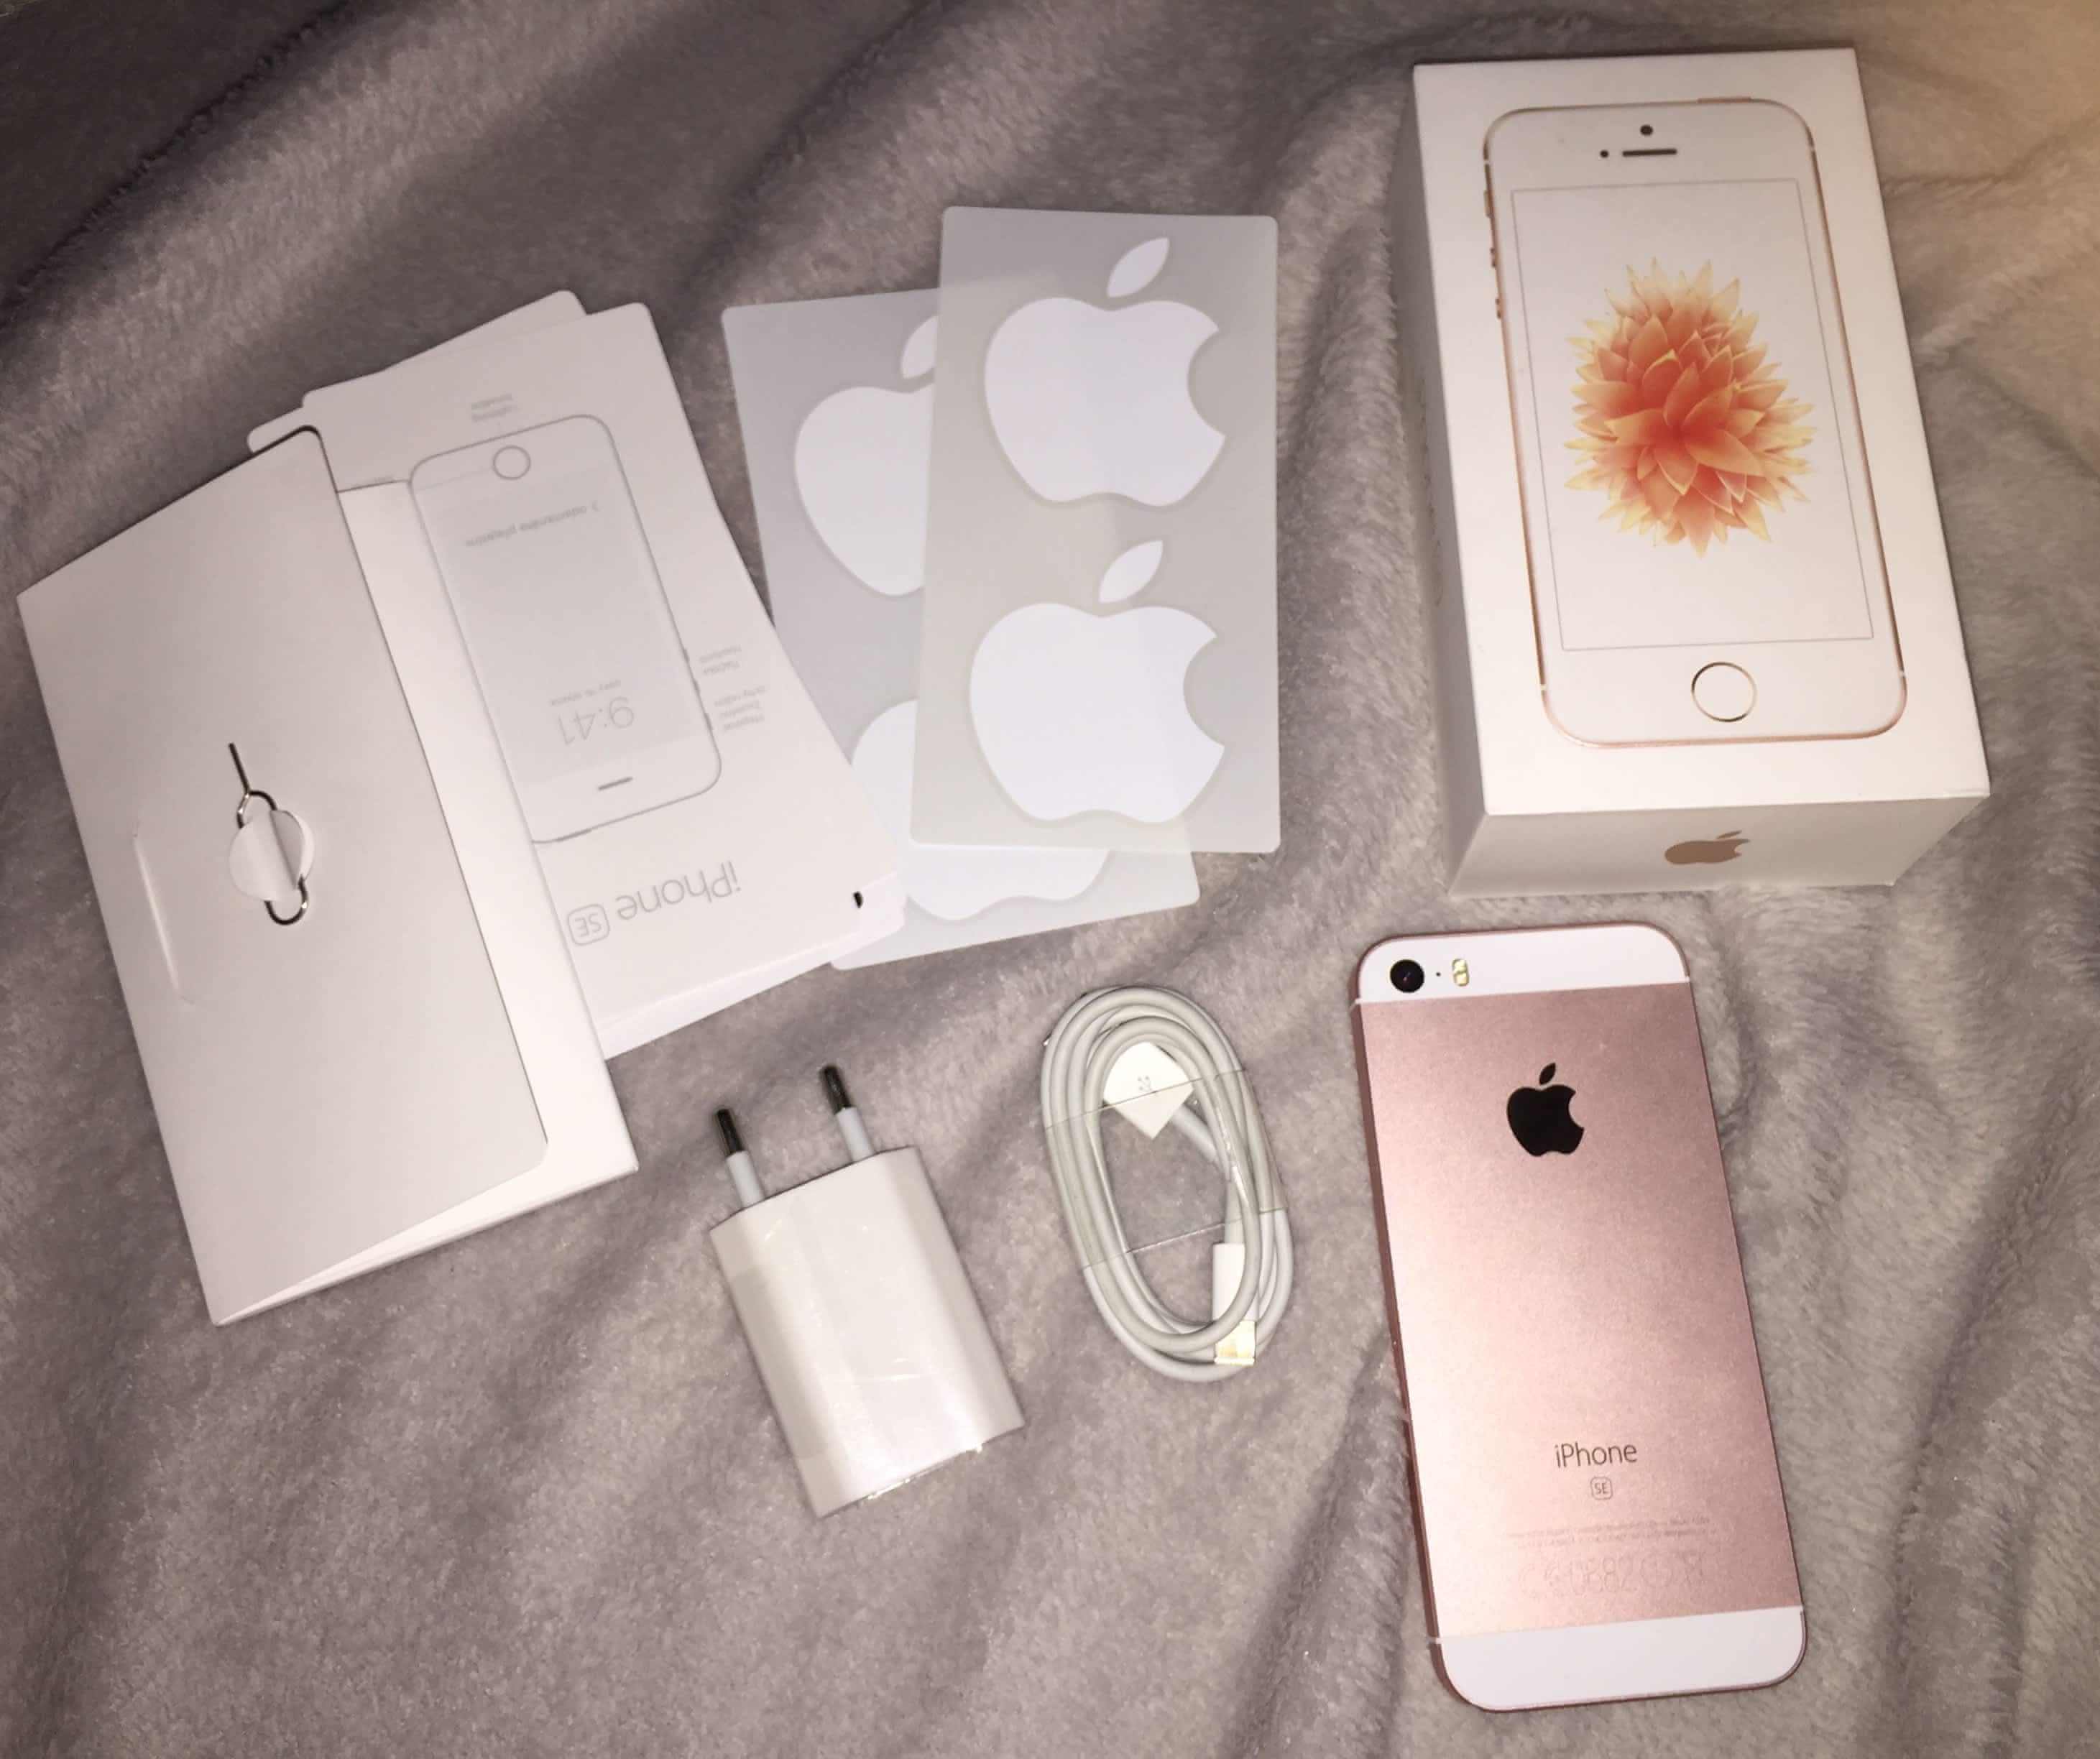 IPhone SE rose gold 16Gb - Apple Bazar